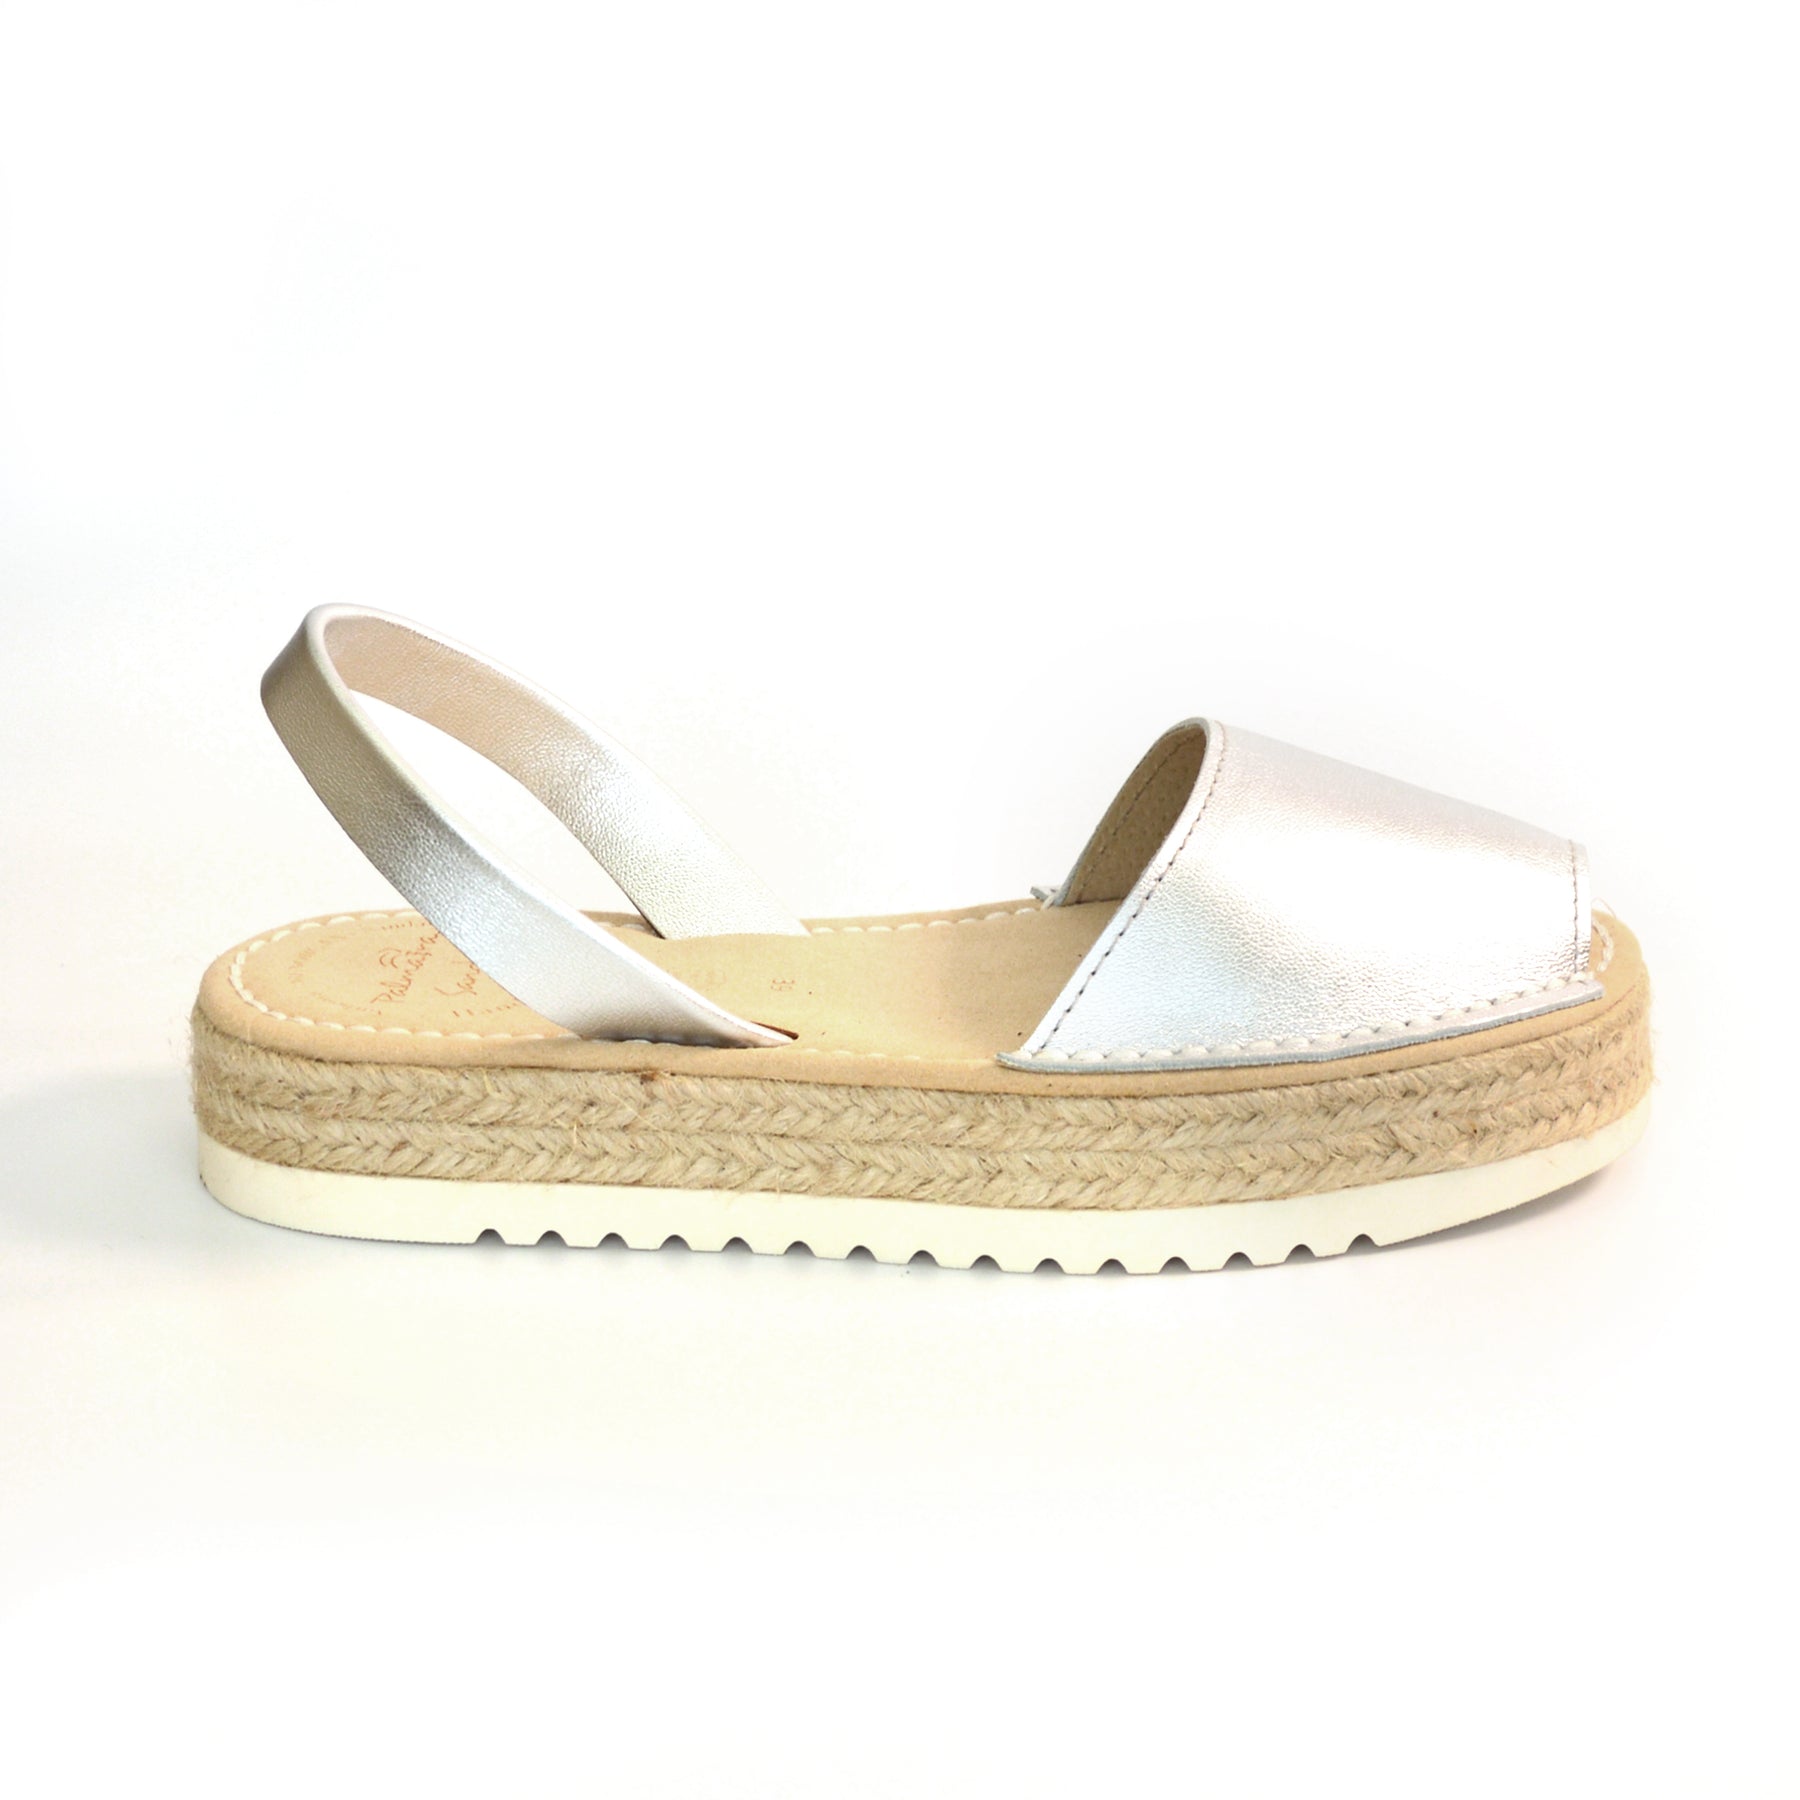 silver leather metallic slinback lowforms avarcas menorcan spanish sandals